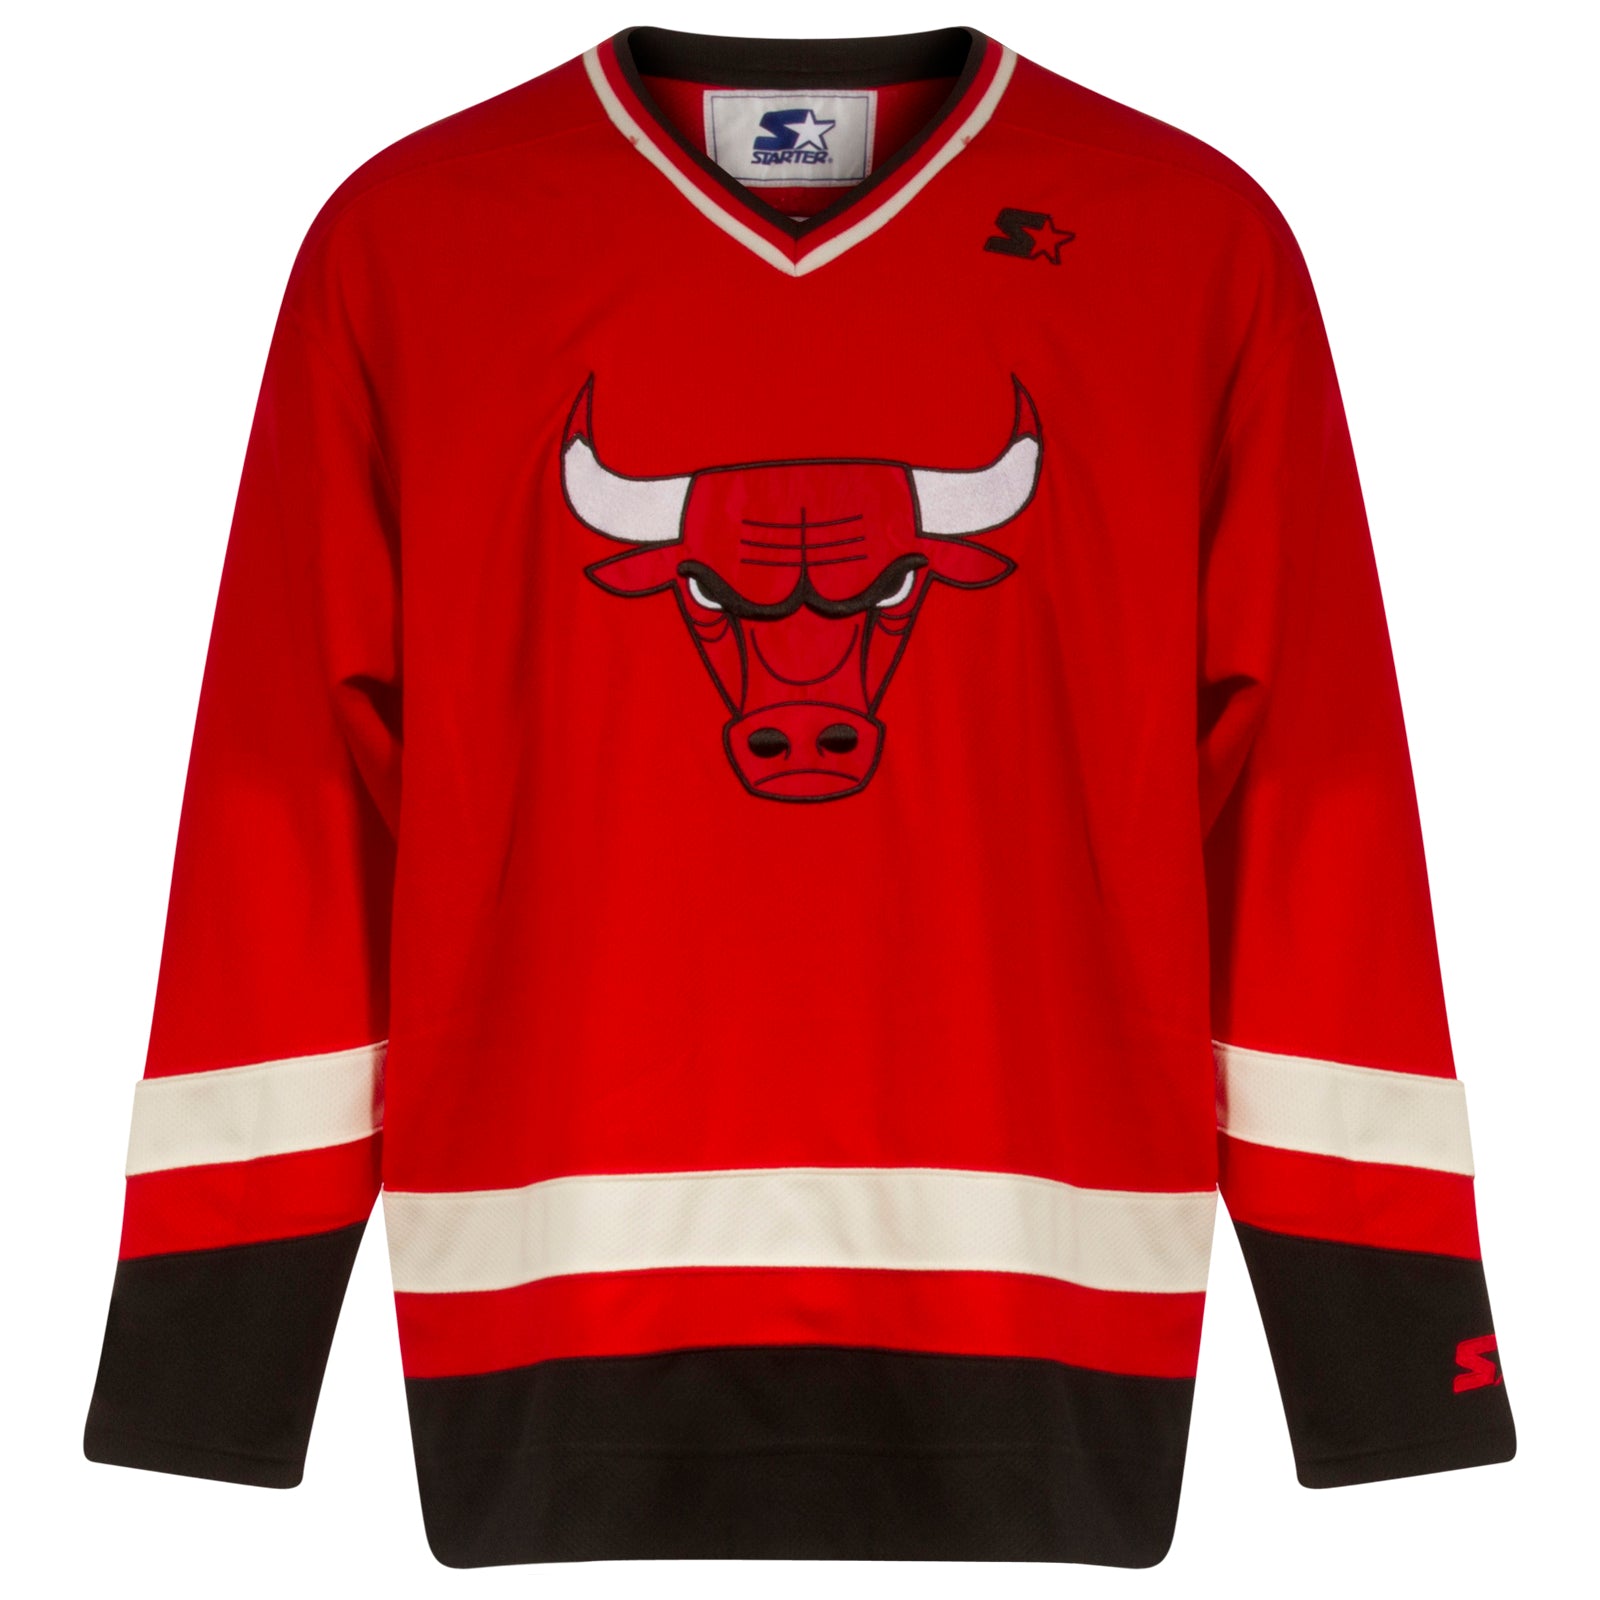 red bulls jersey